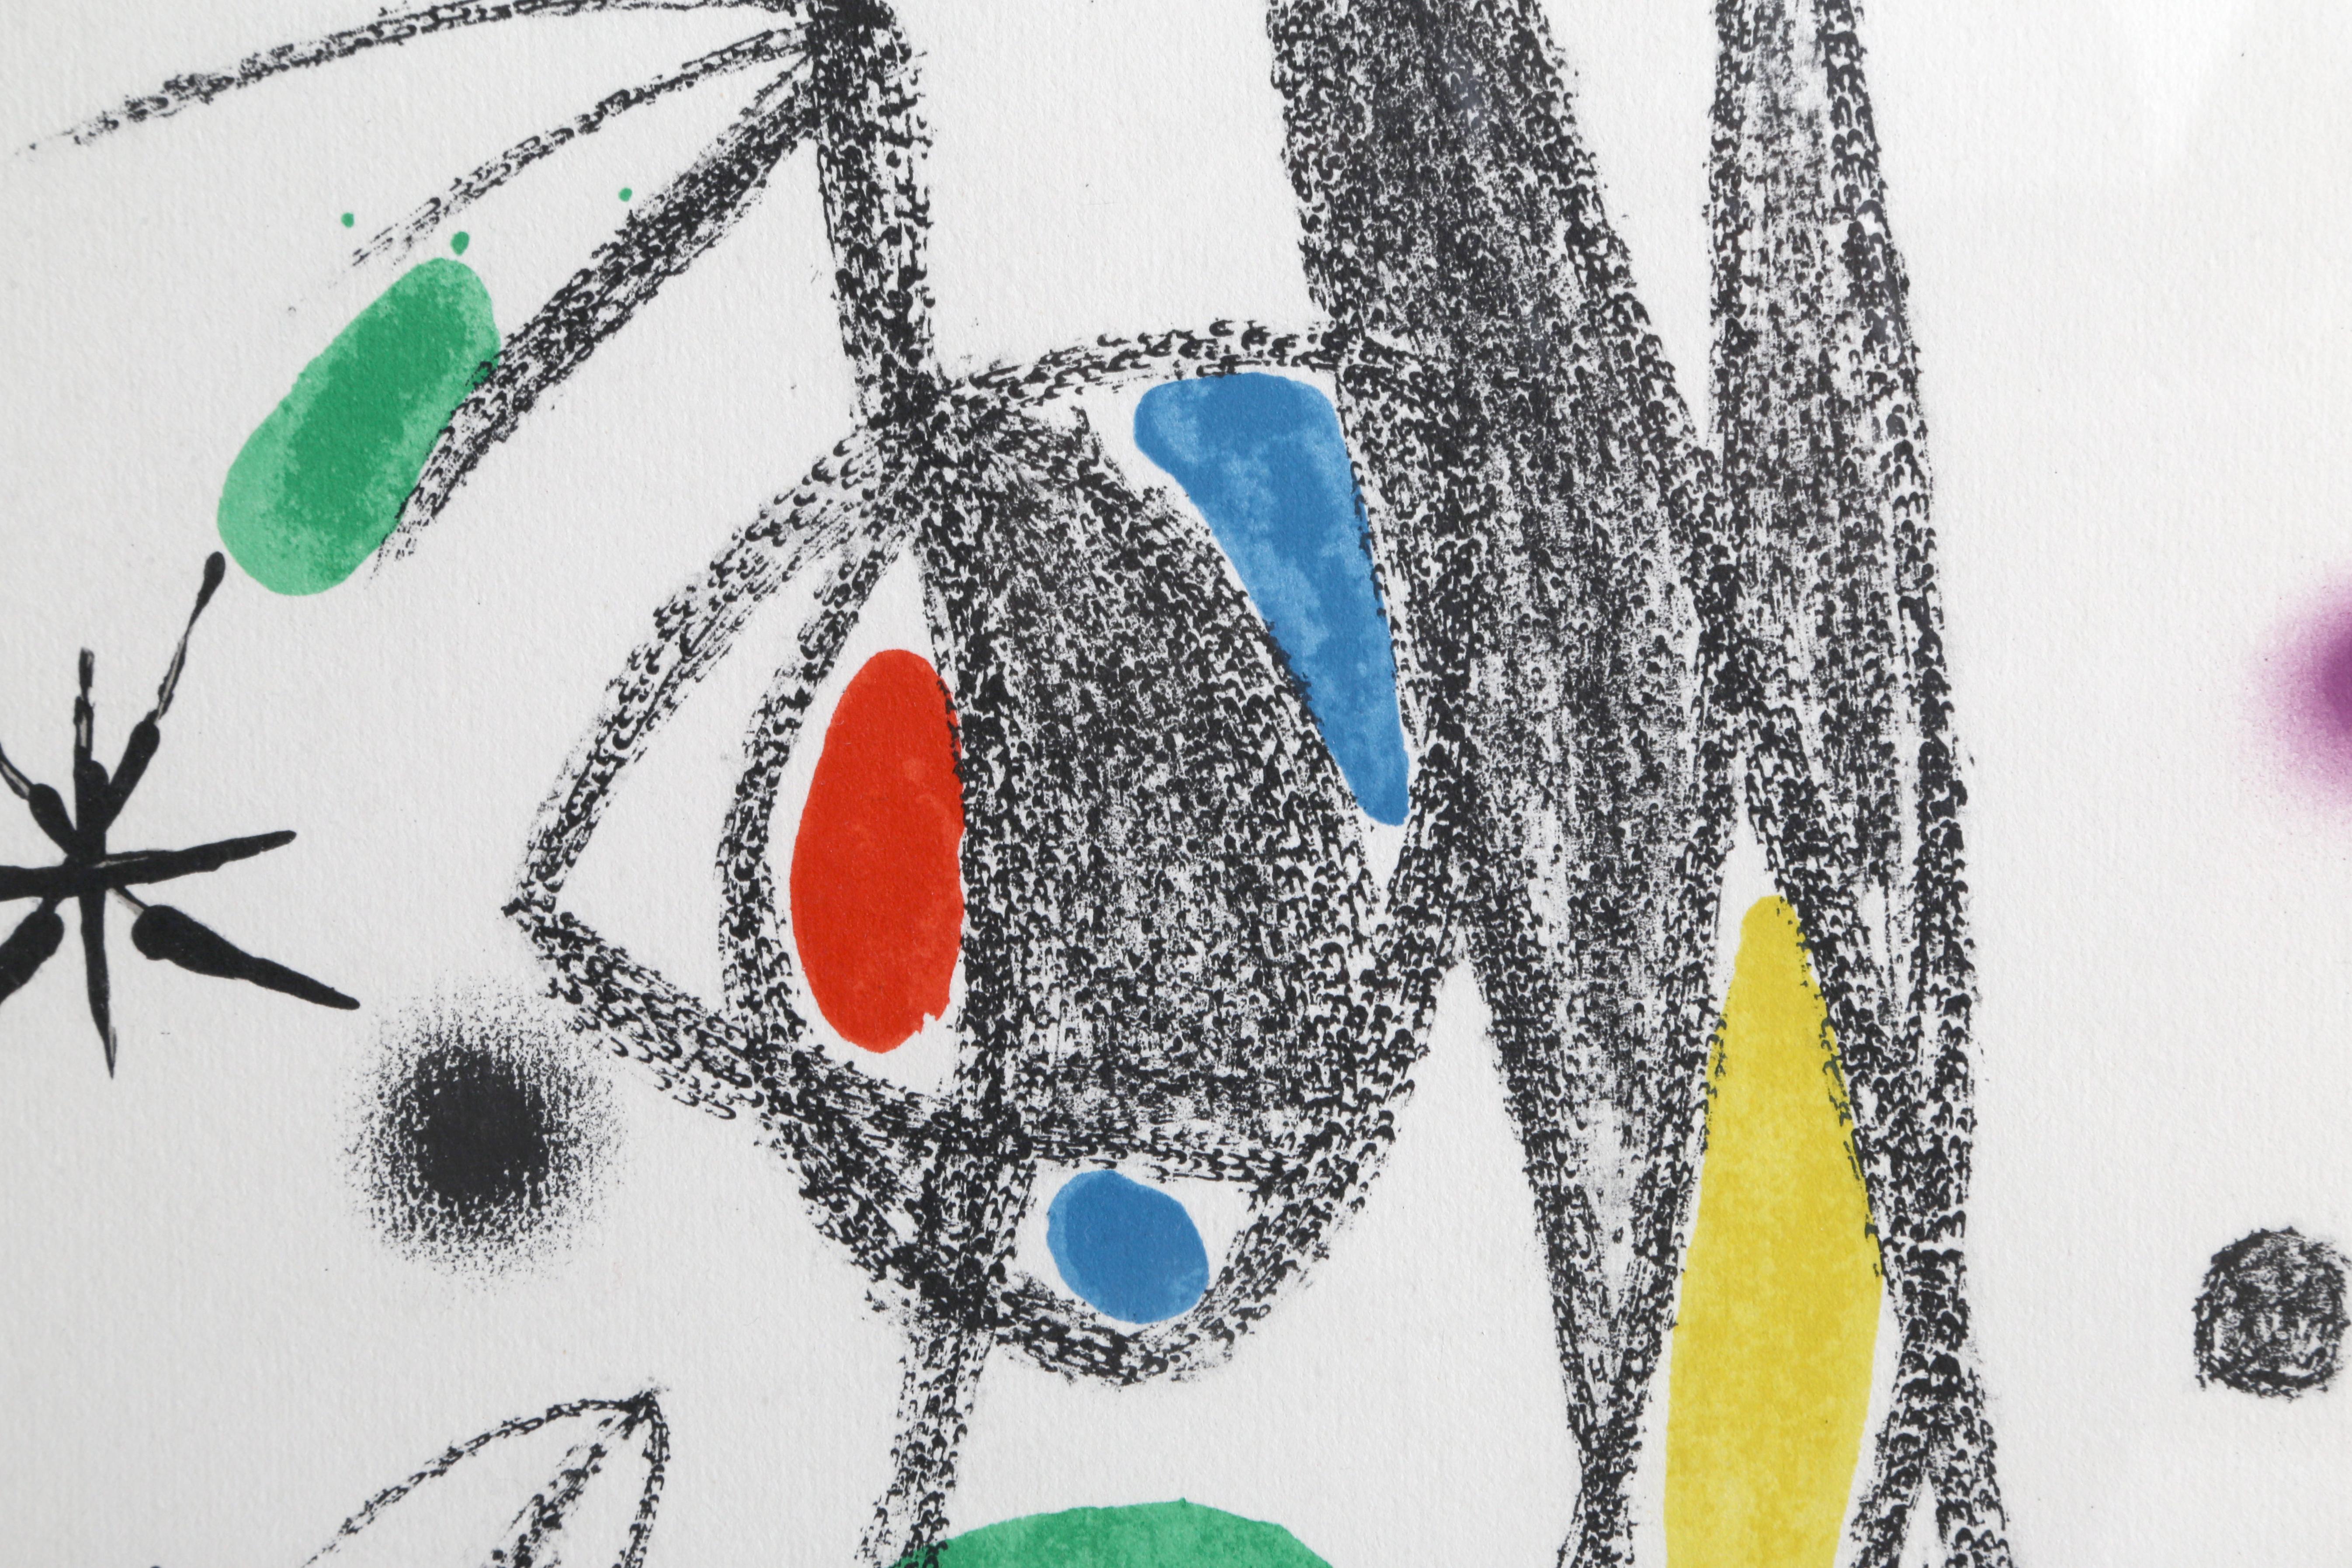 Artiste : Joan Miro, espagnol (1893 - 1983)
Titre : Maravillas con Variaciones Acrosticas en el jardin de Miro (Numéro 16)
Année : 1975
Moyen : Lithographie, signée dans la plaque
Édition : 1500
Taille : 19.5 in. x 14 in. (49.53 cm x 35.56